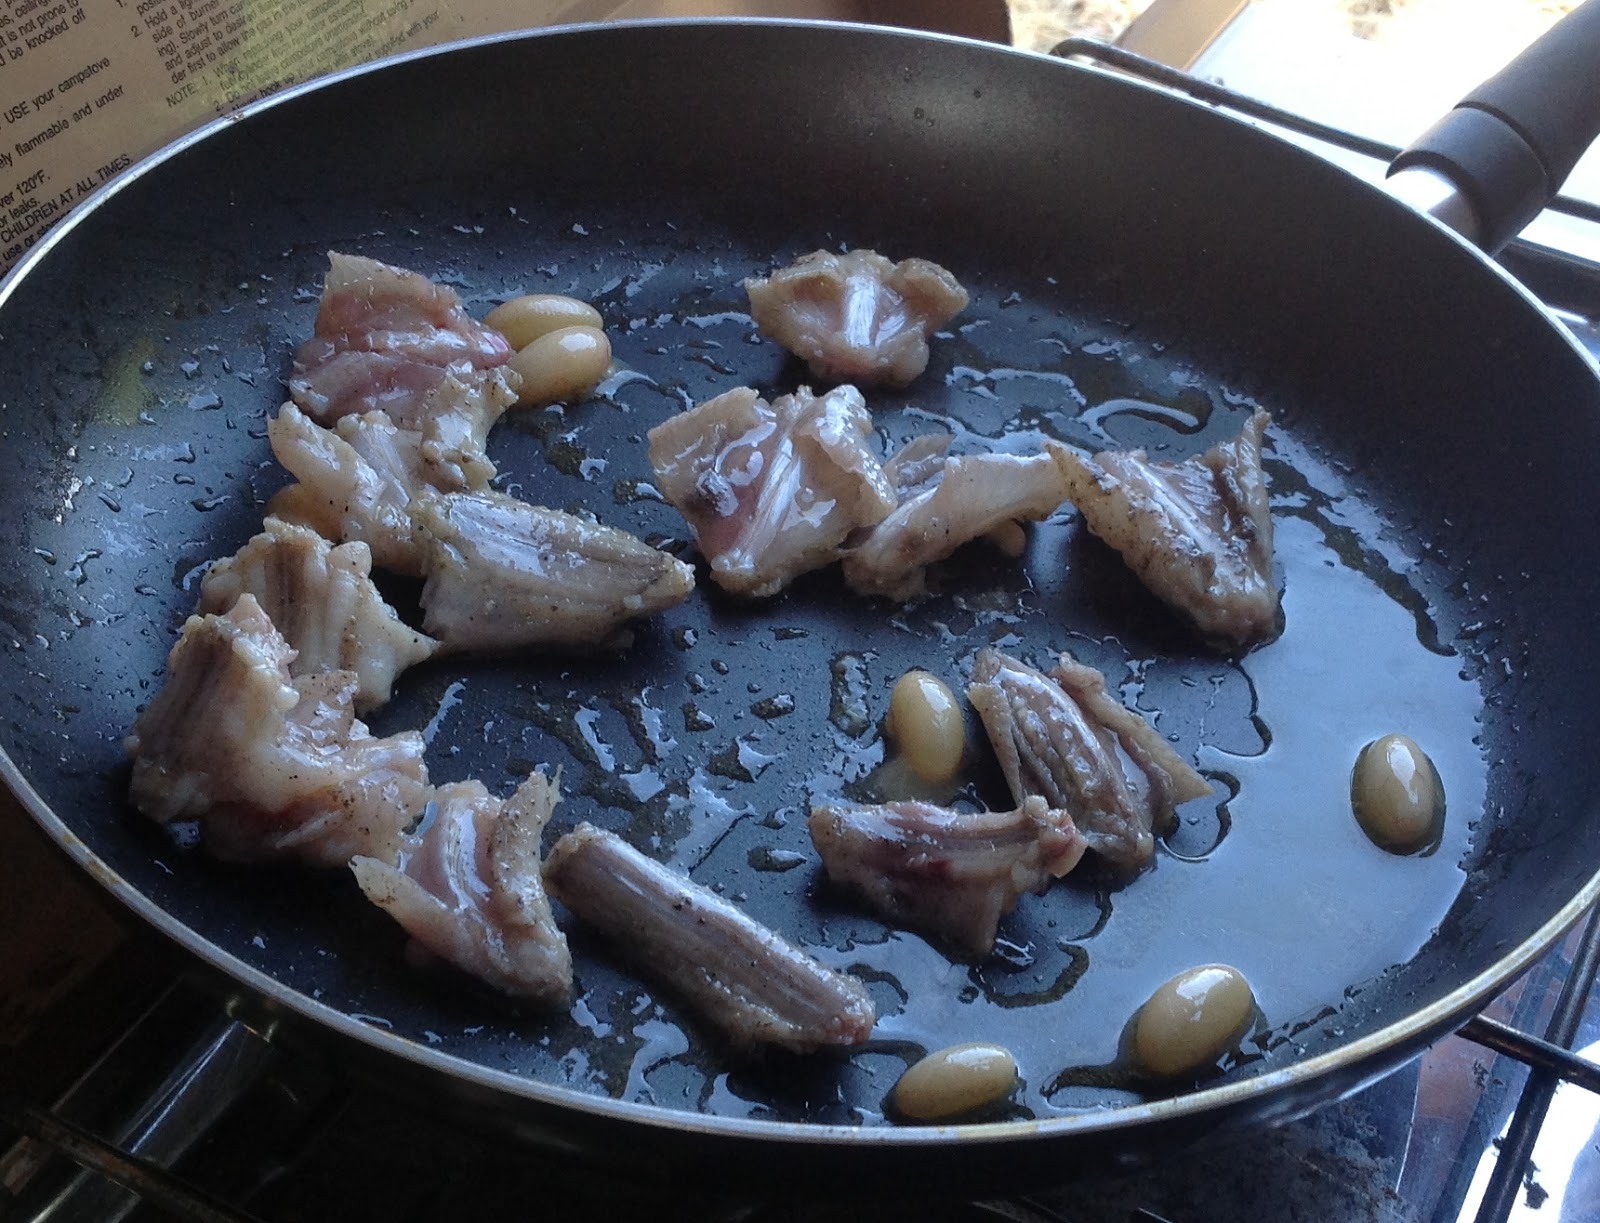 Ken Albala's Food Rant: Manual Meat Slicer